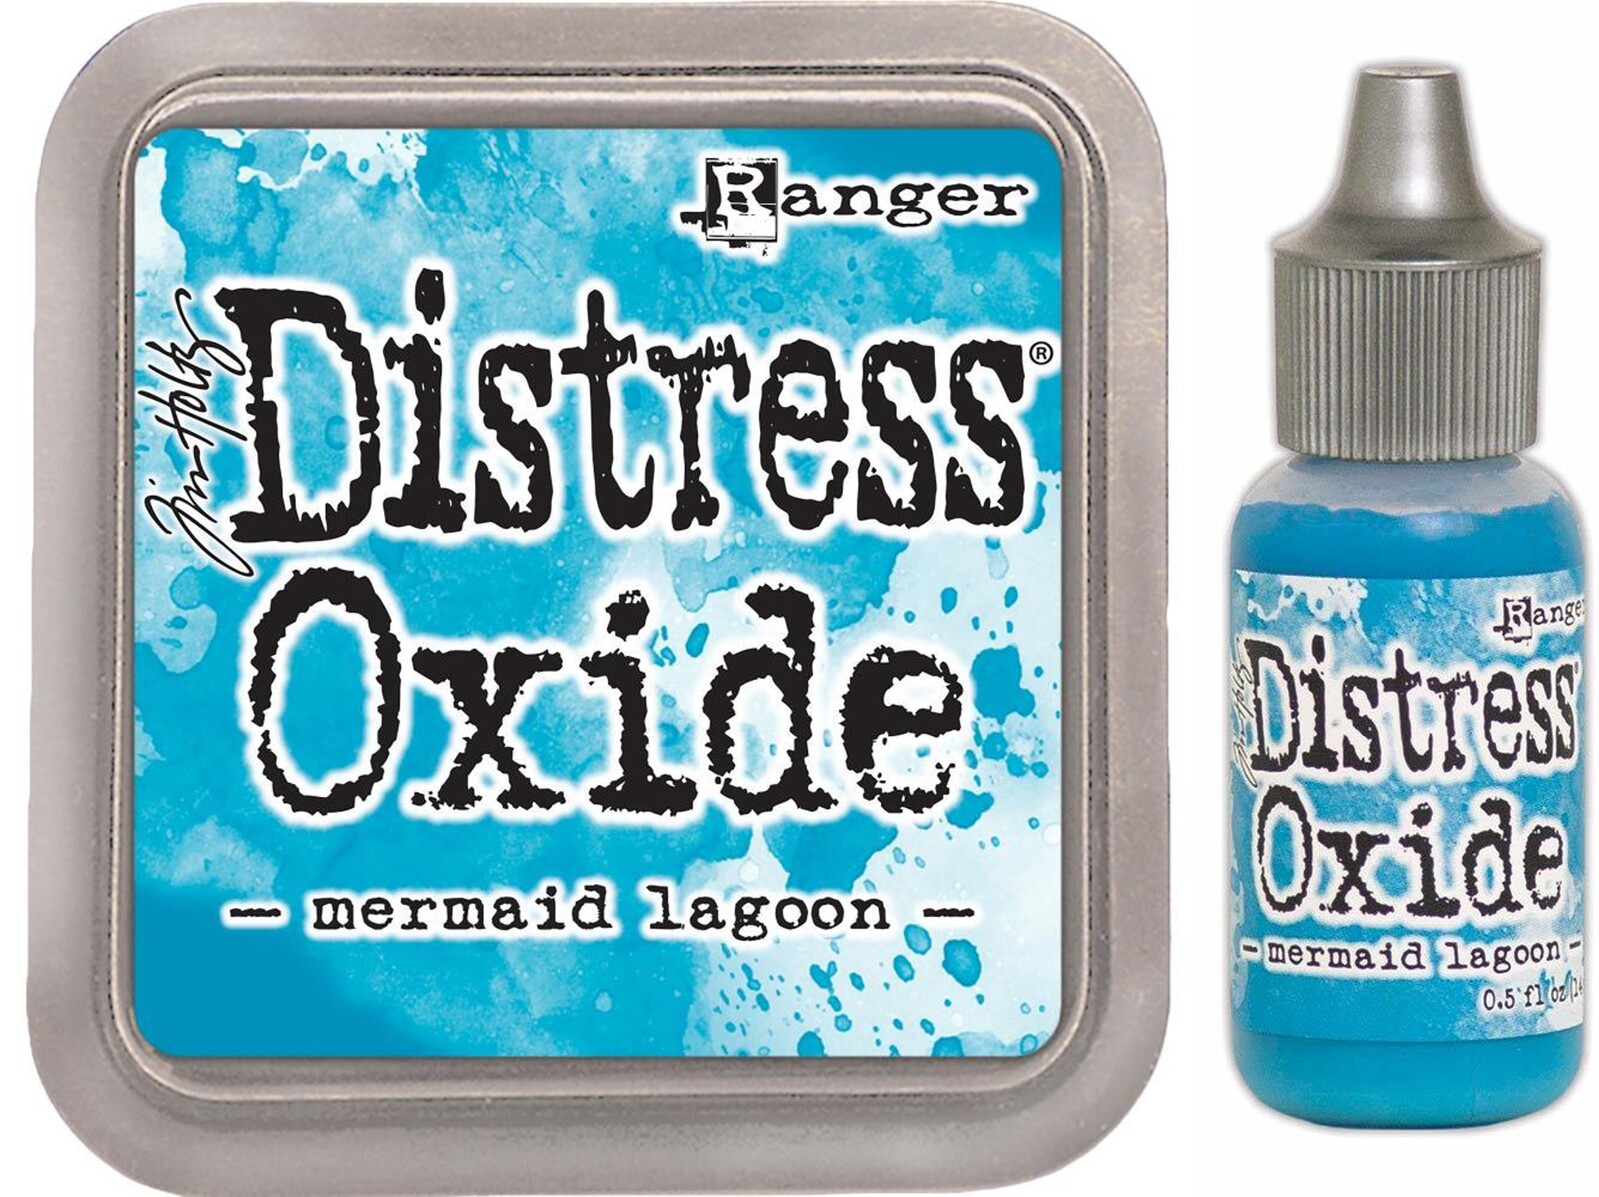 Tim Holtz Distress Oxide Ink Pad + Reinker Mermaid Lagoon